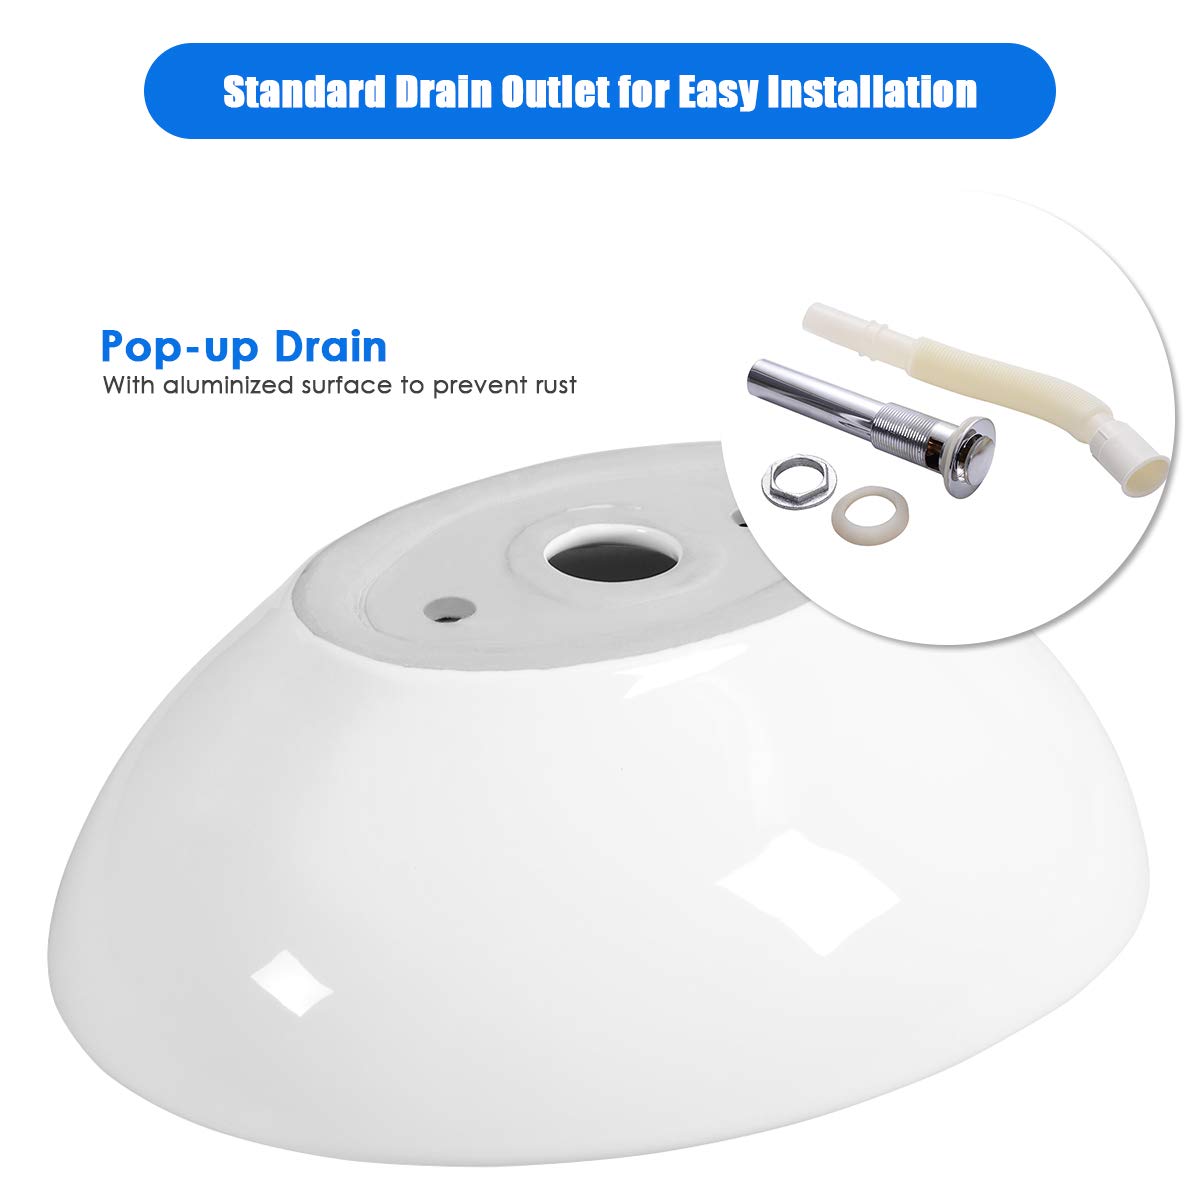 Giantex Vessel Sink 16x13 Inch Basin Porcelain W/Pop Up Drain Oval Bathroom Ceramic Sink Bowl